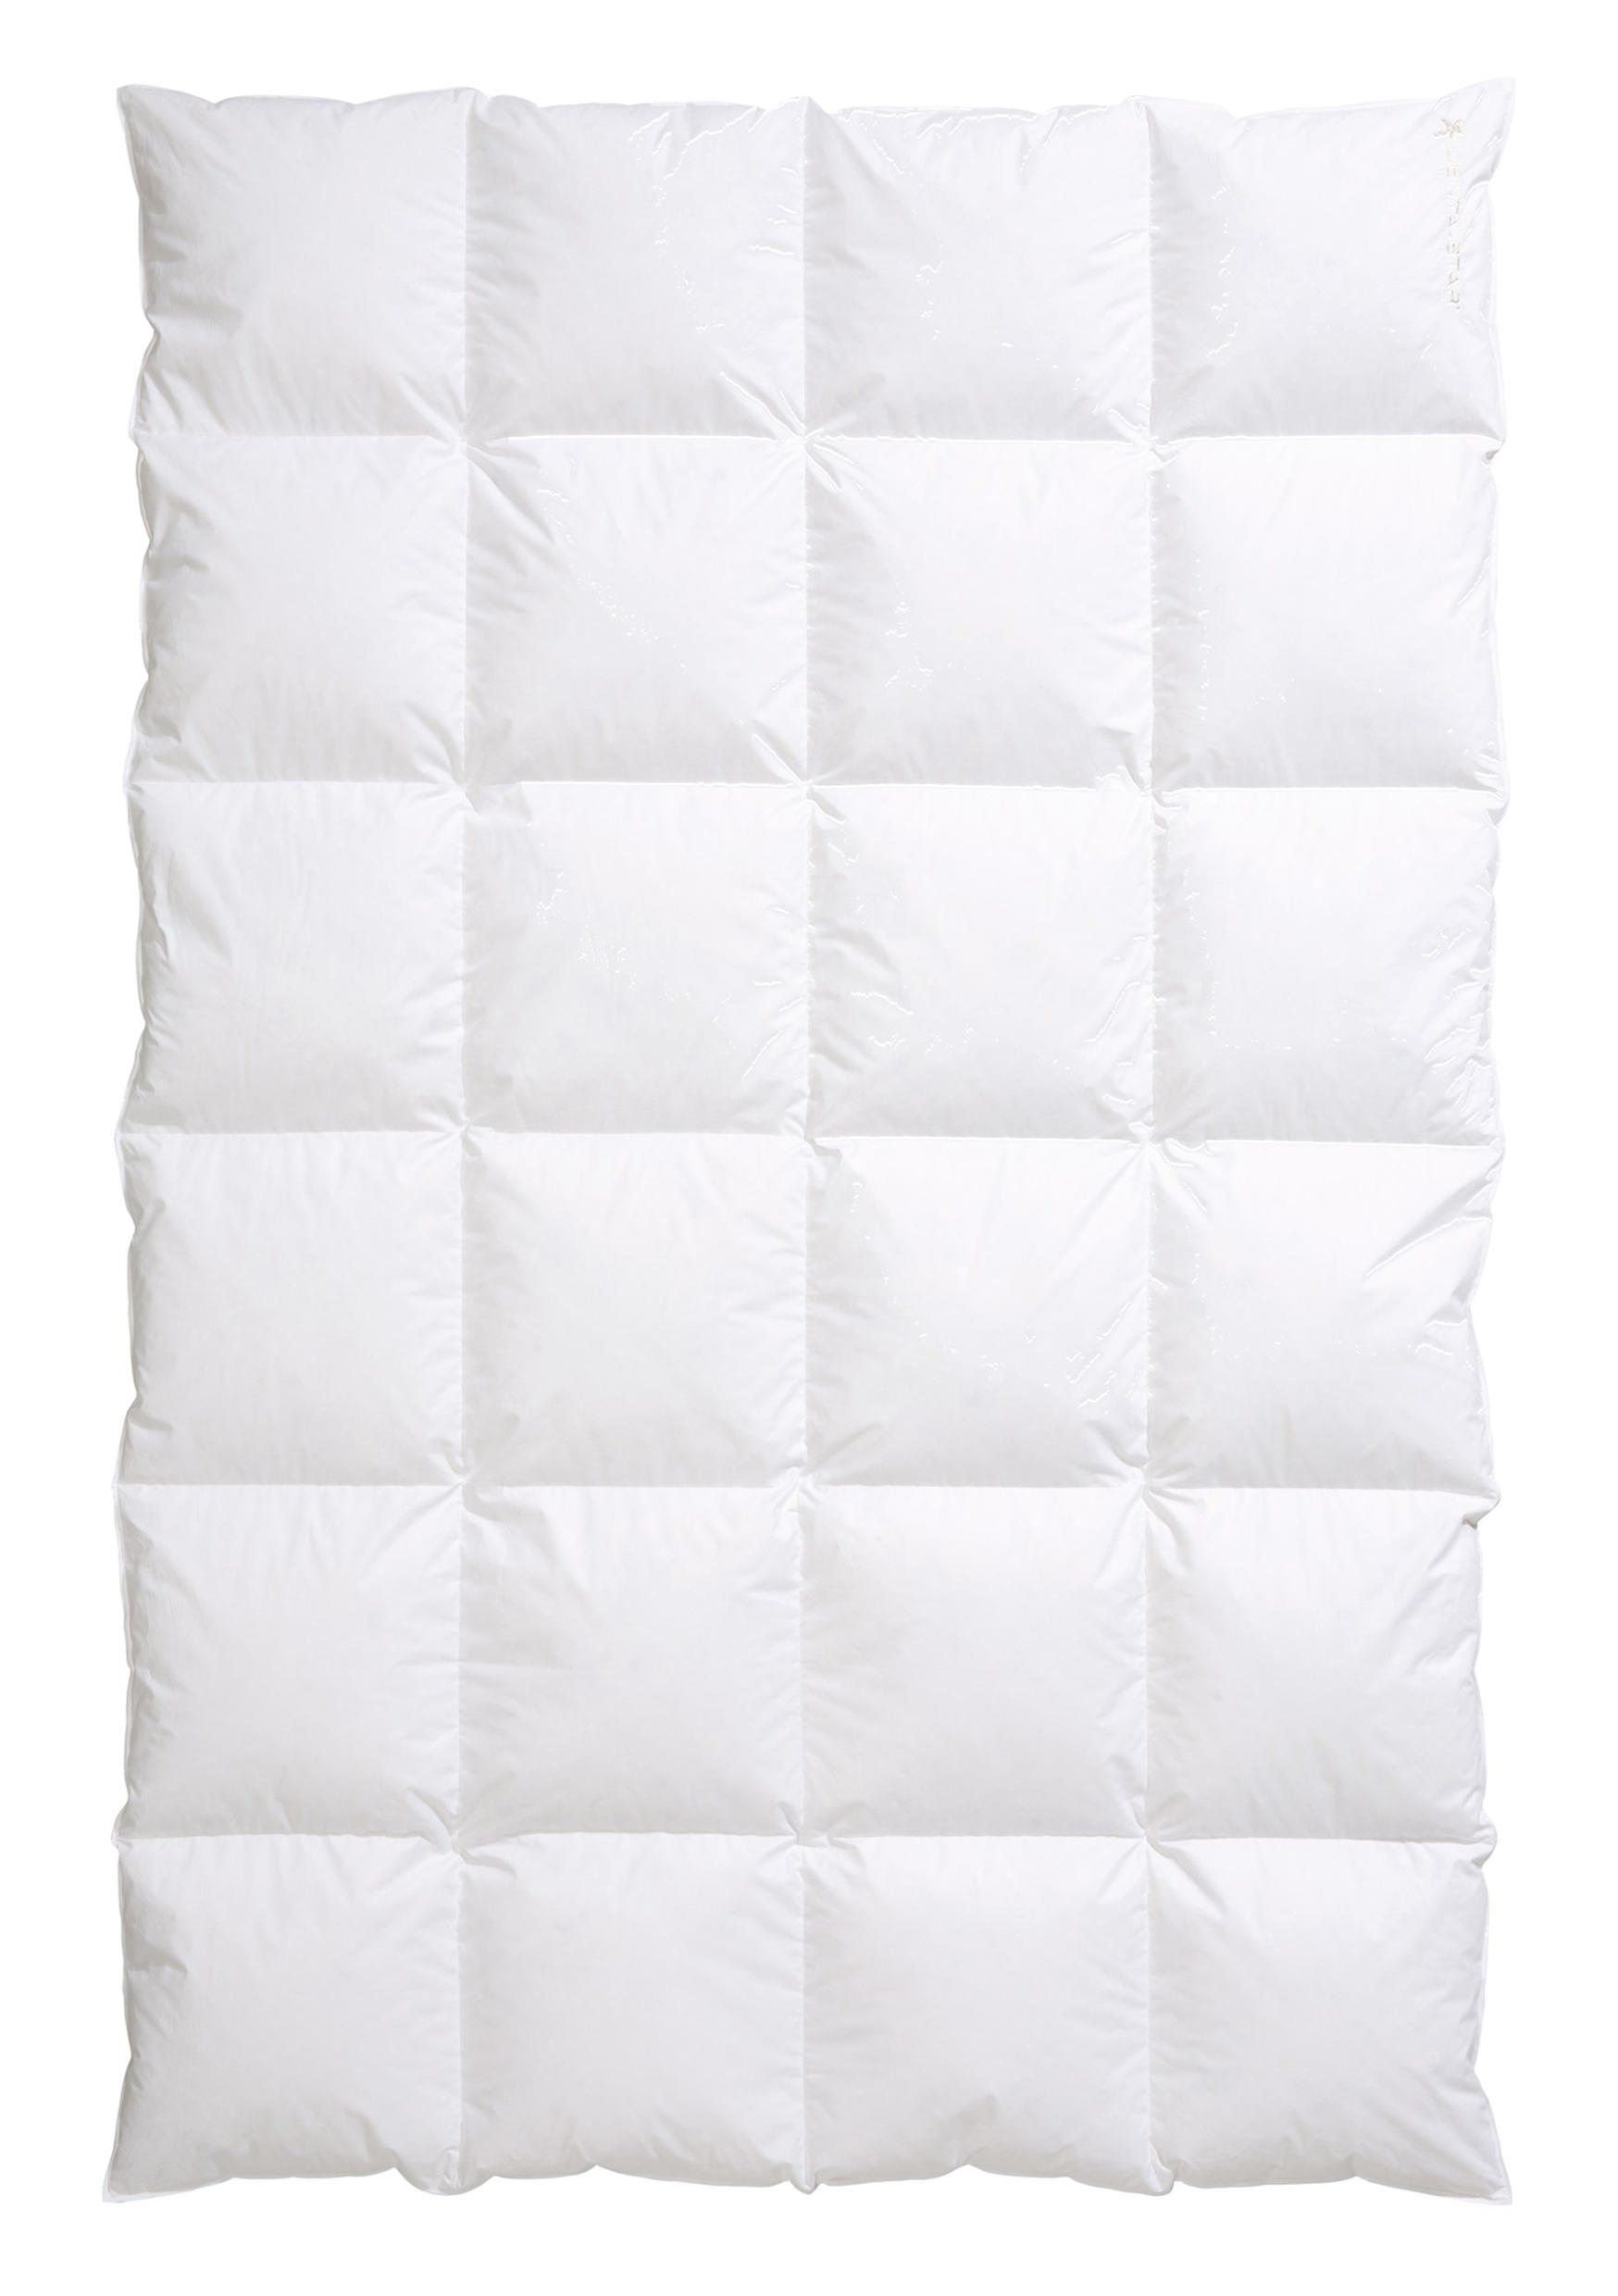 WINTERBETT  Harmony  135/200 cm   - Weiß, Basics, Textil (135/200cm) - Centa-Star